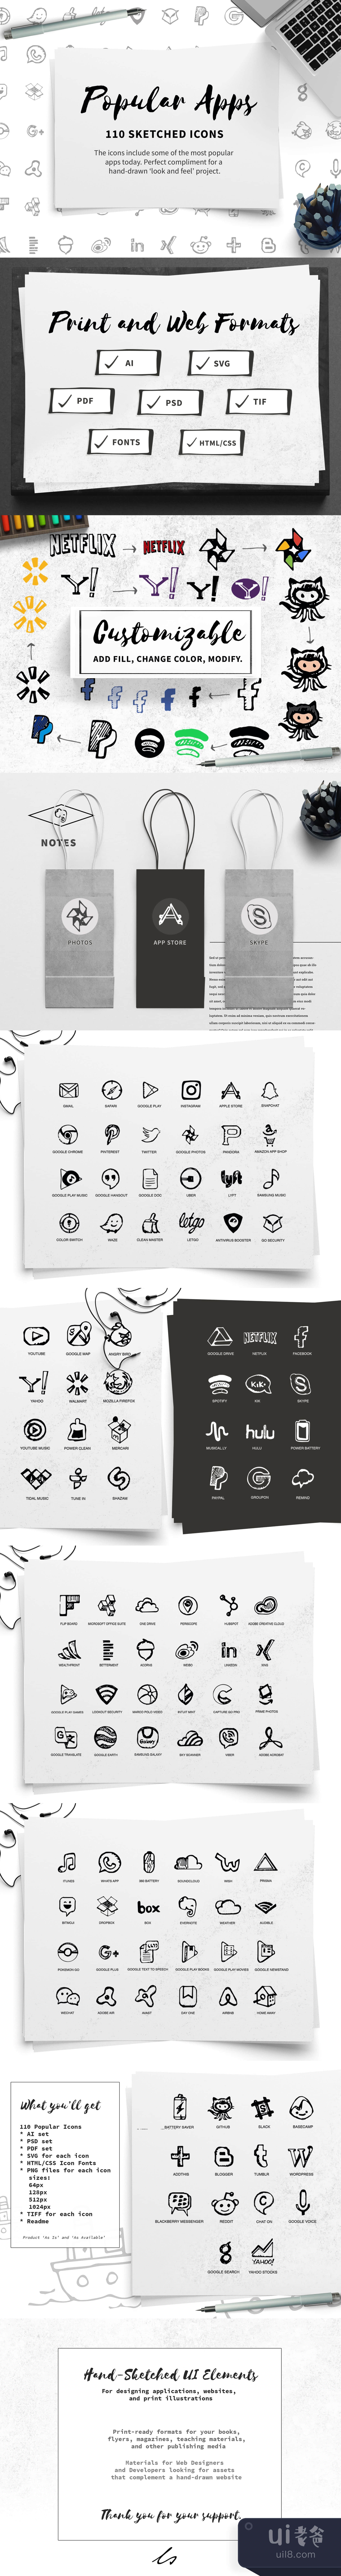 流行的应用程序图标 (Popular Apps Icons)插图1